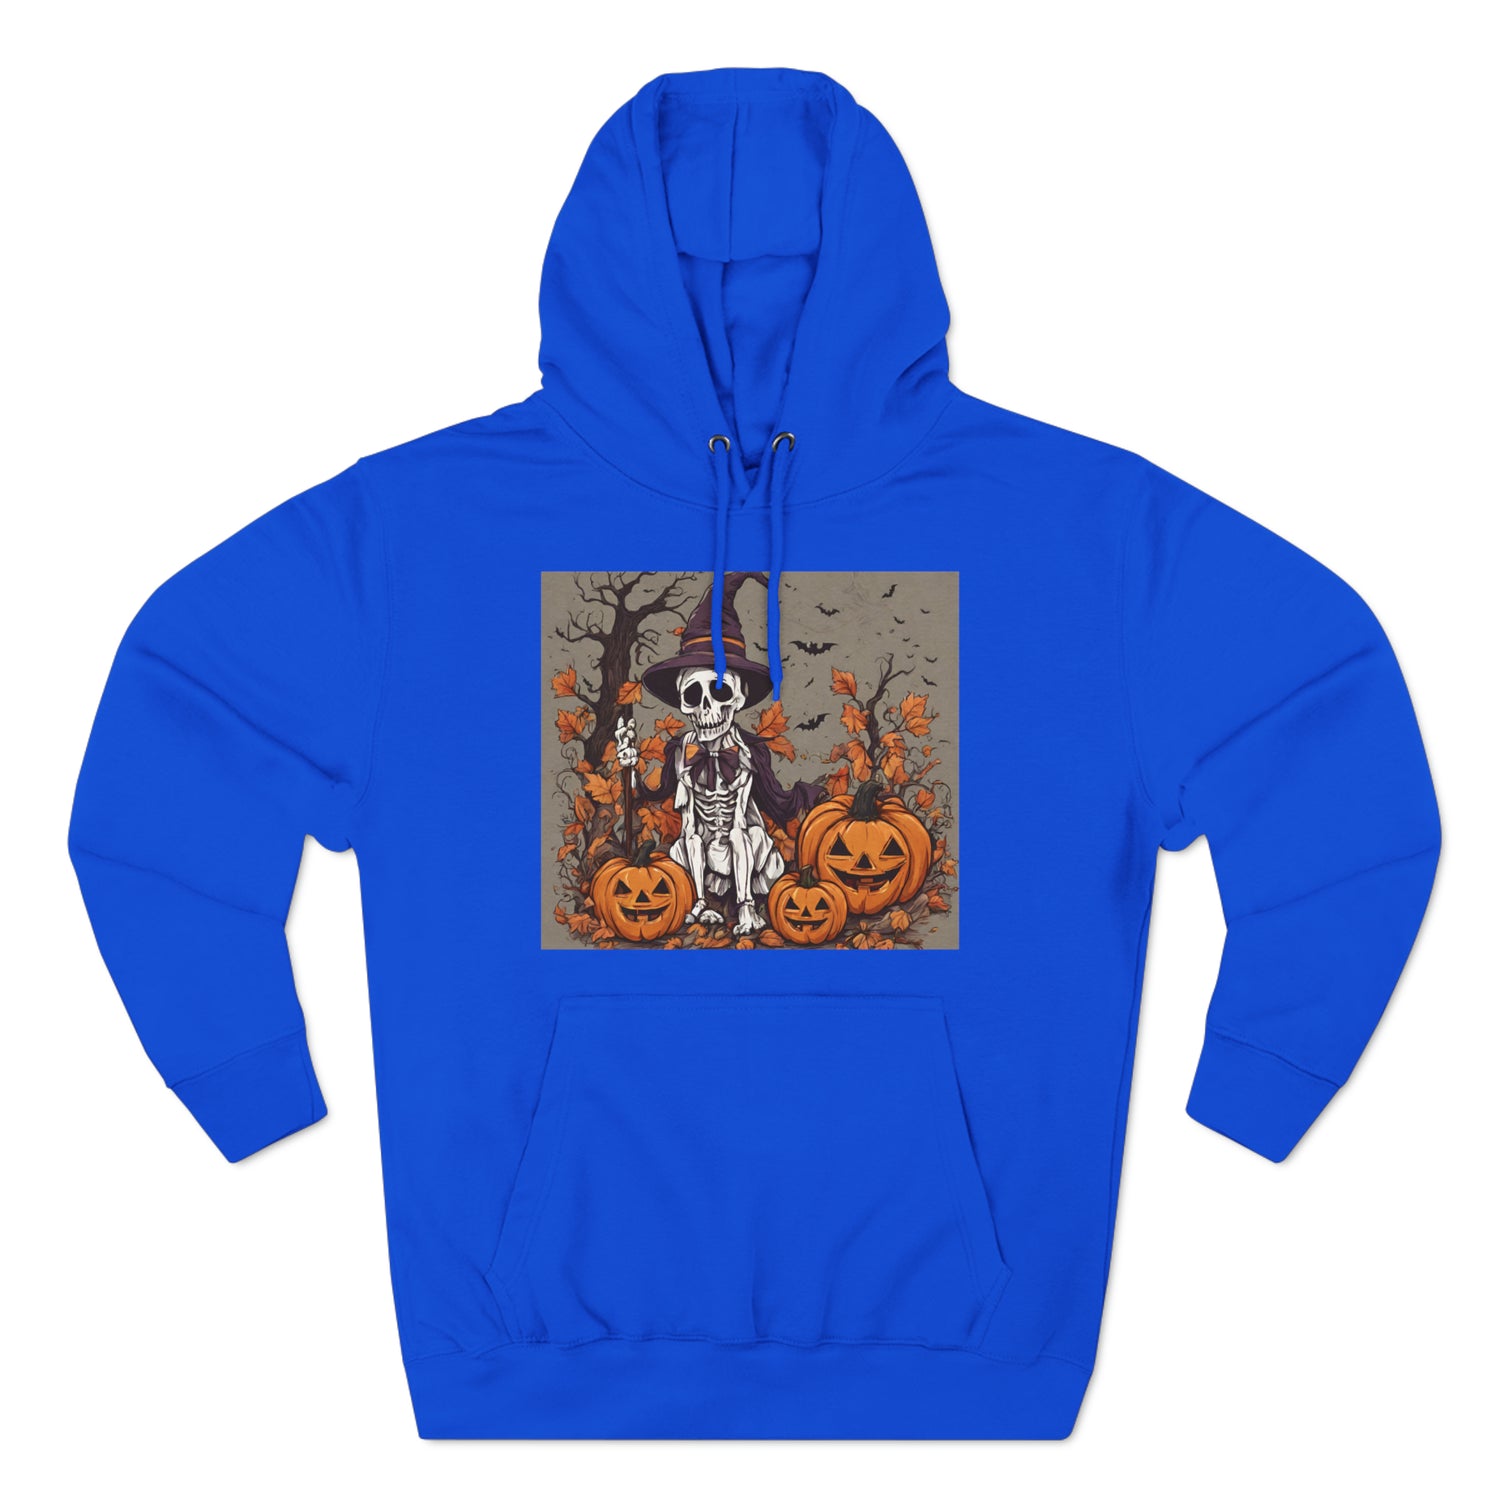 Royal Blue Hoodie Hoodie Halloween Sweatshirt for Spooky Hoodies Outfits this Fall Petrova Designs